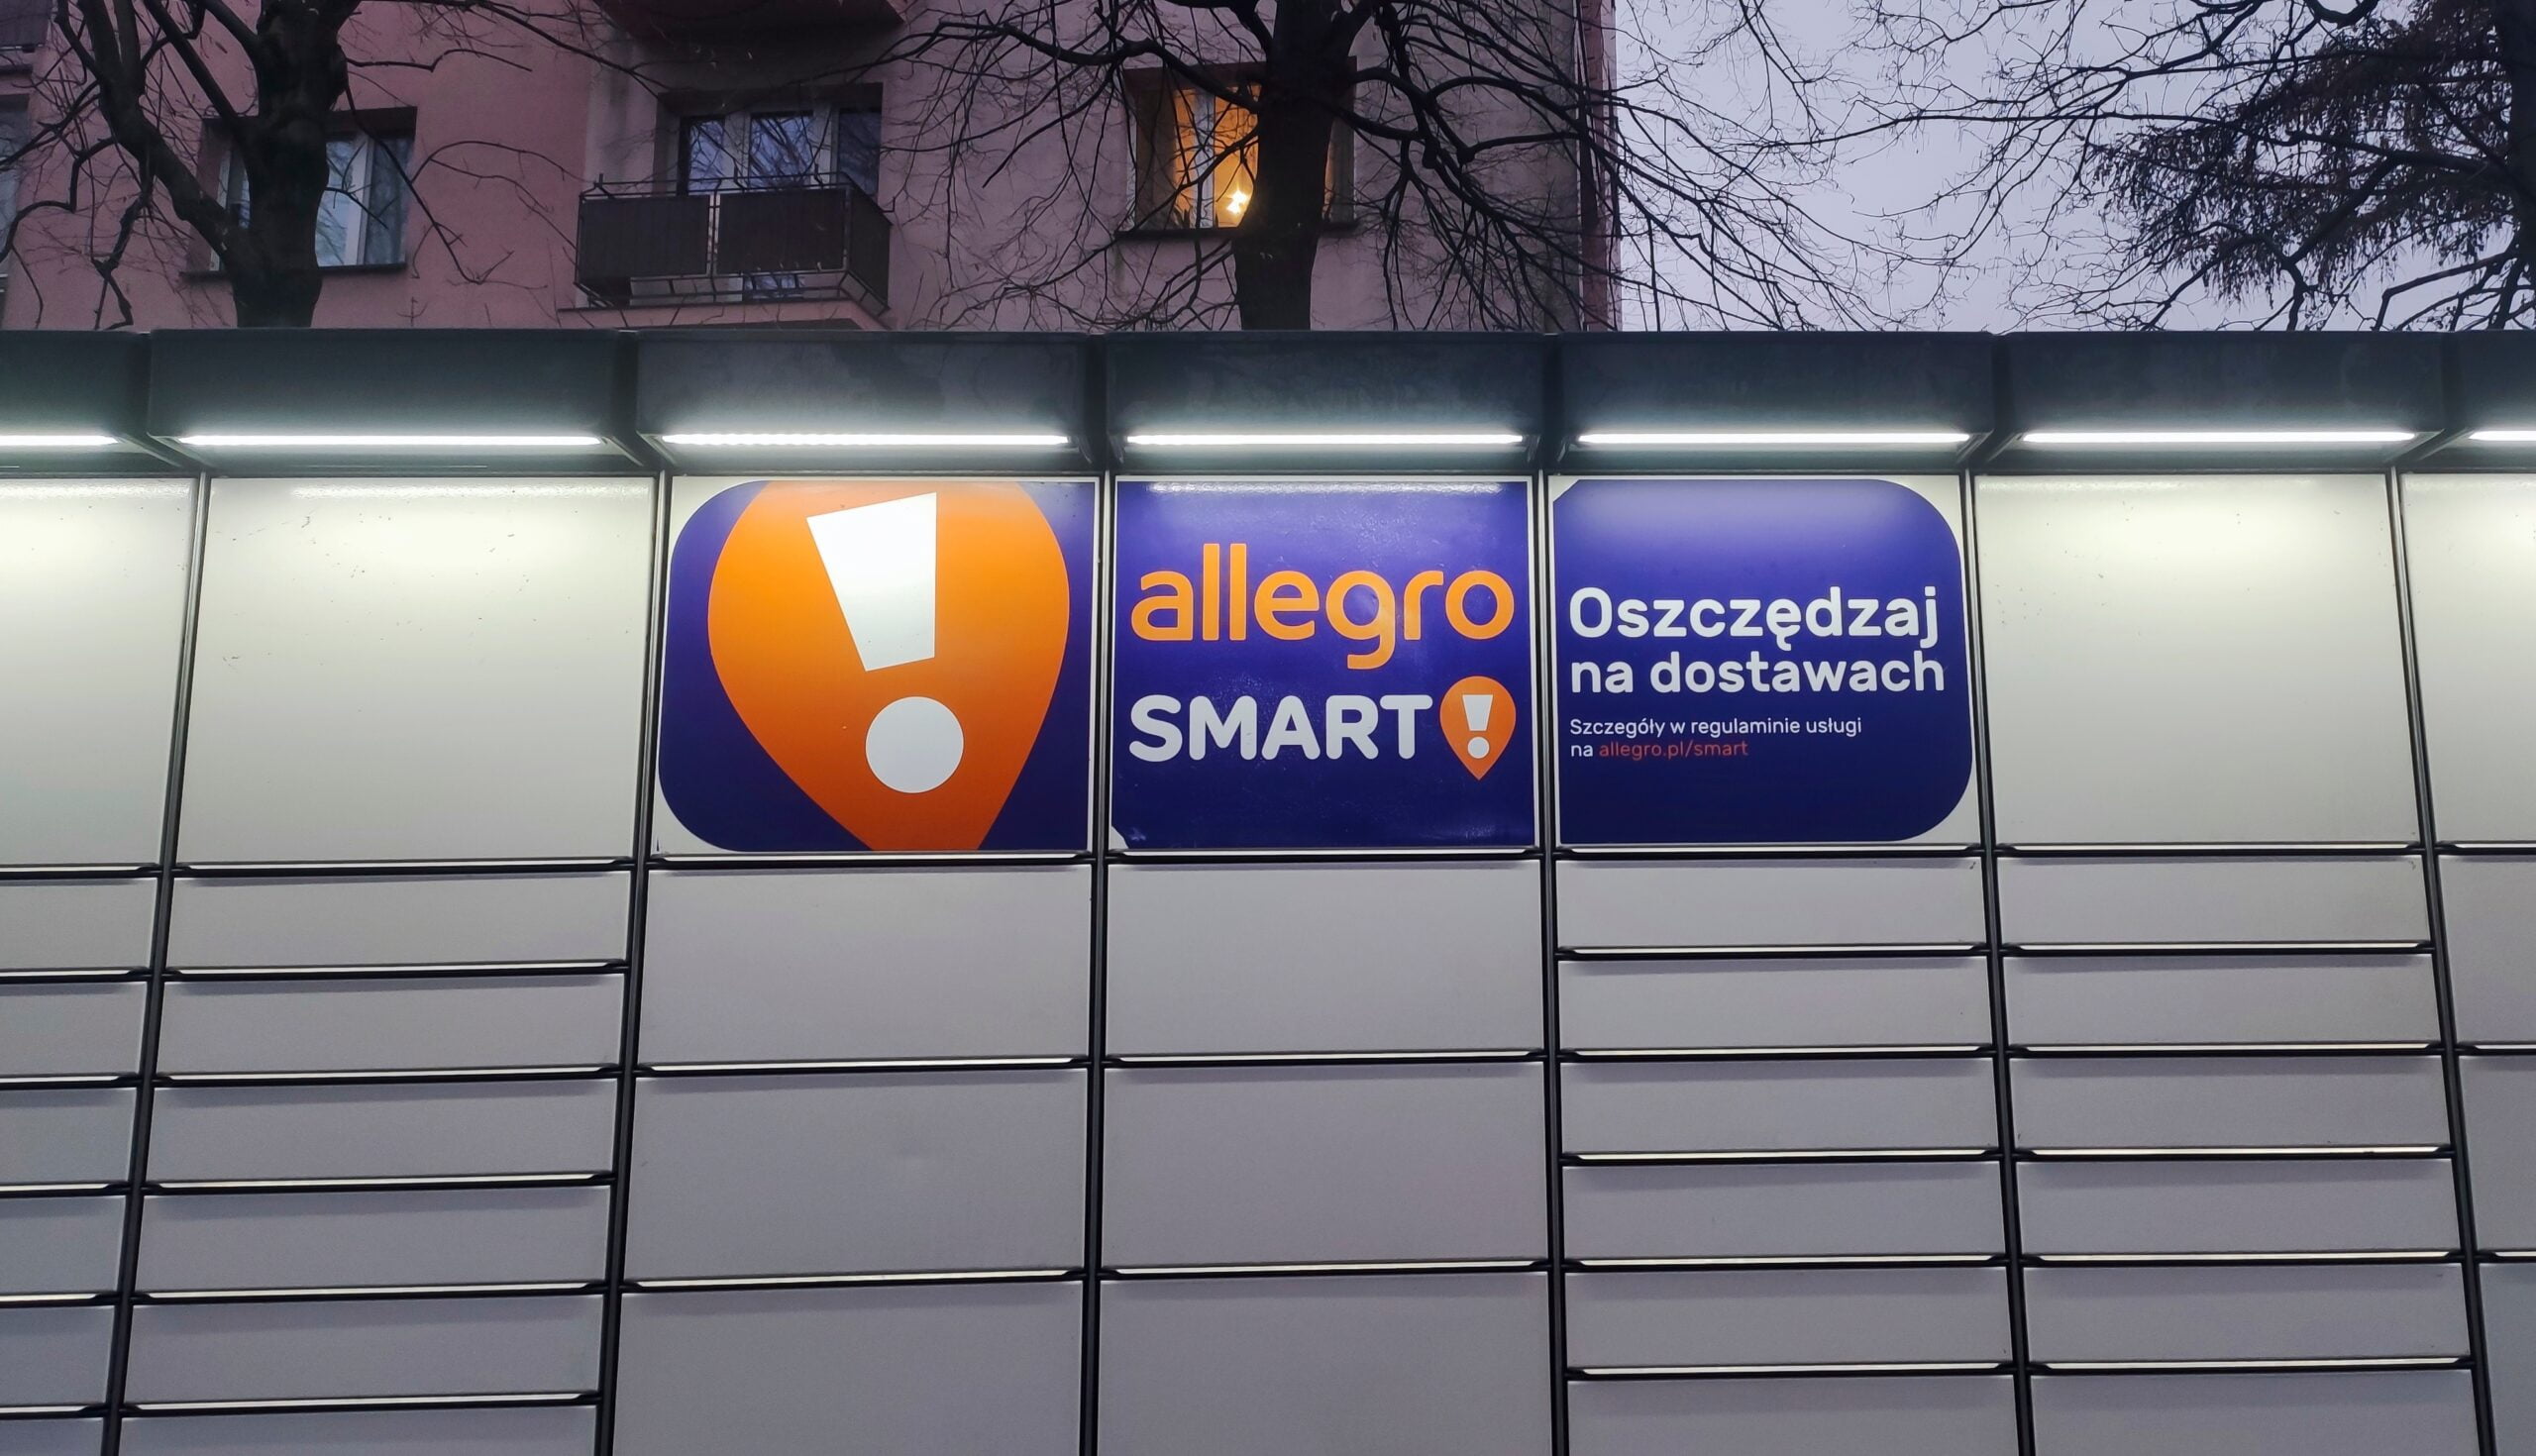 Tablica paczkomatu Allegro z logo "Allegro Smart!" i napisem "Oszczędzaj na dostawach".